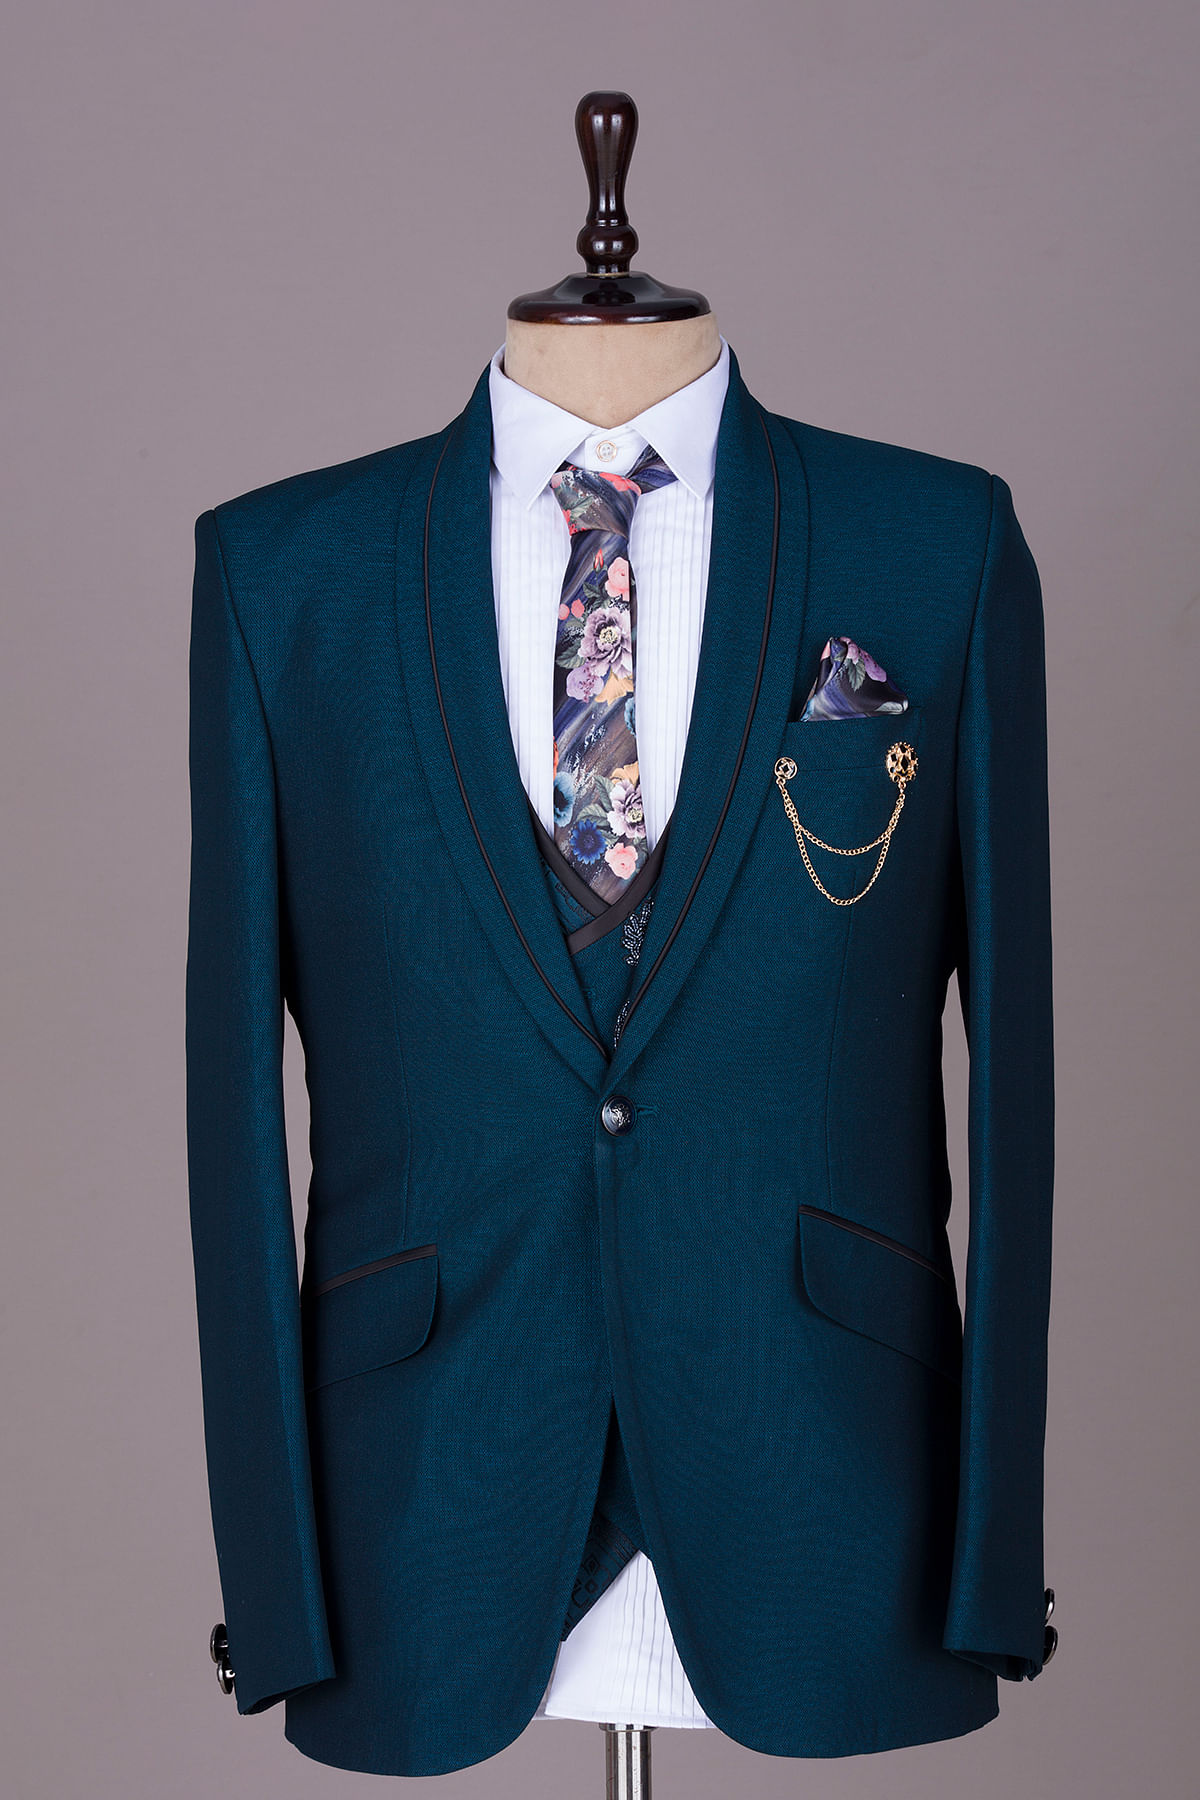 Suits | A refined wardrobe staple | Grand Le Mar®